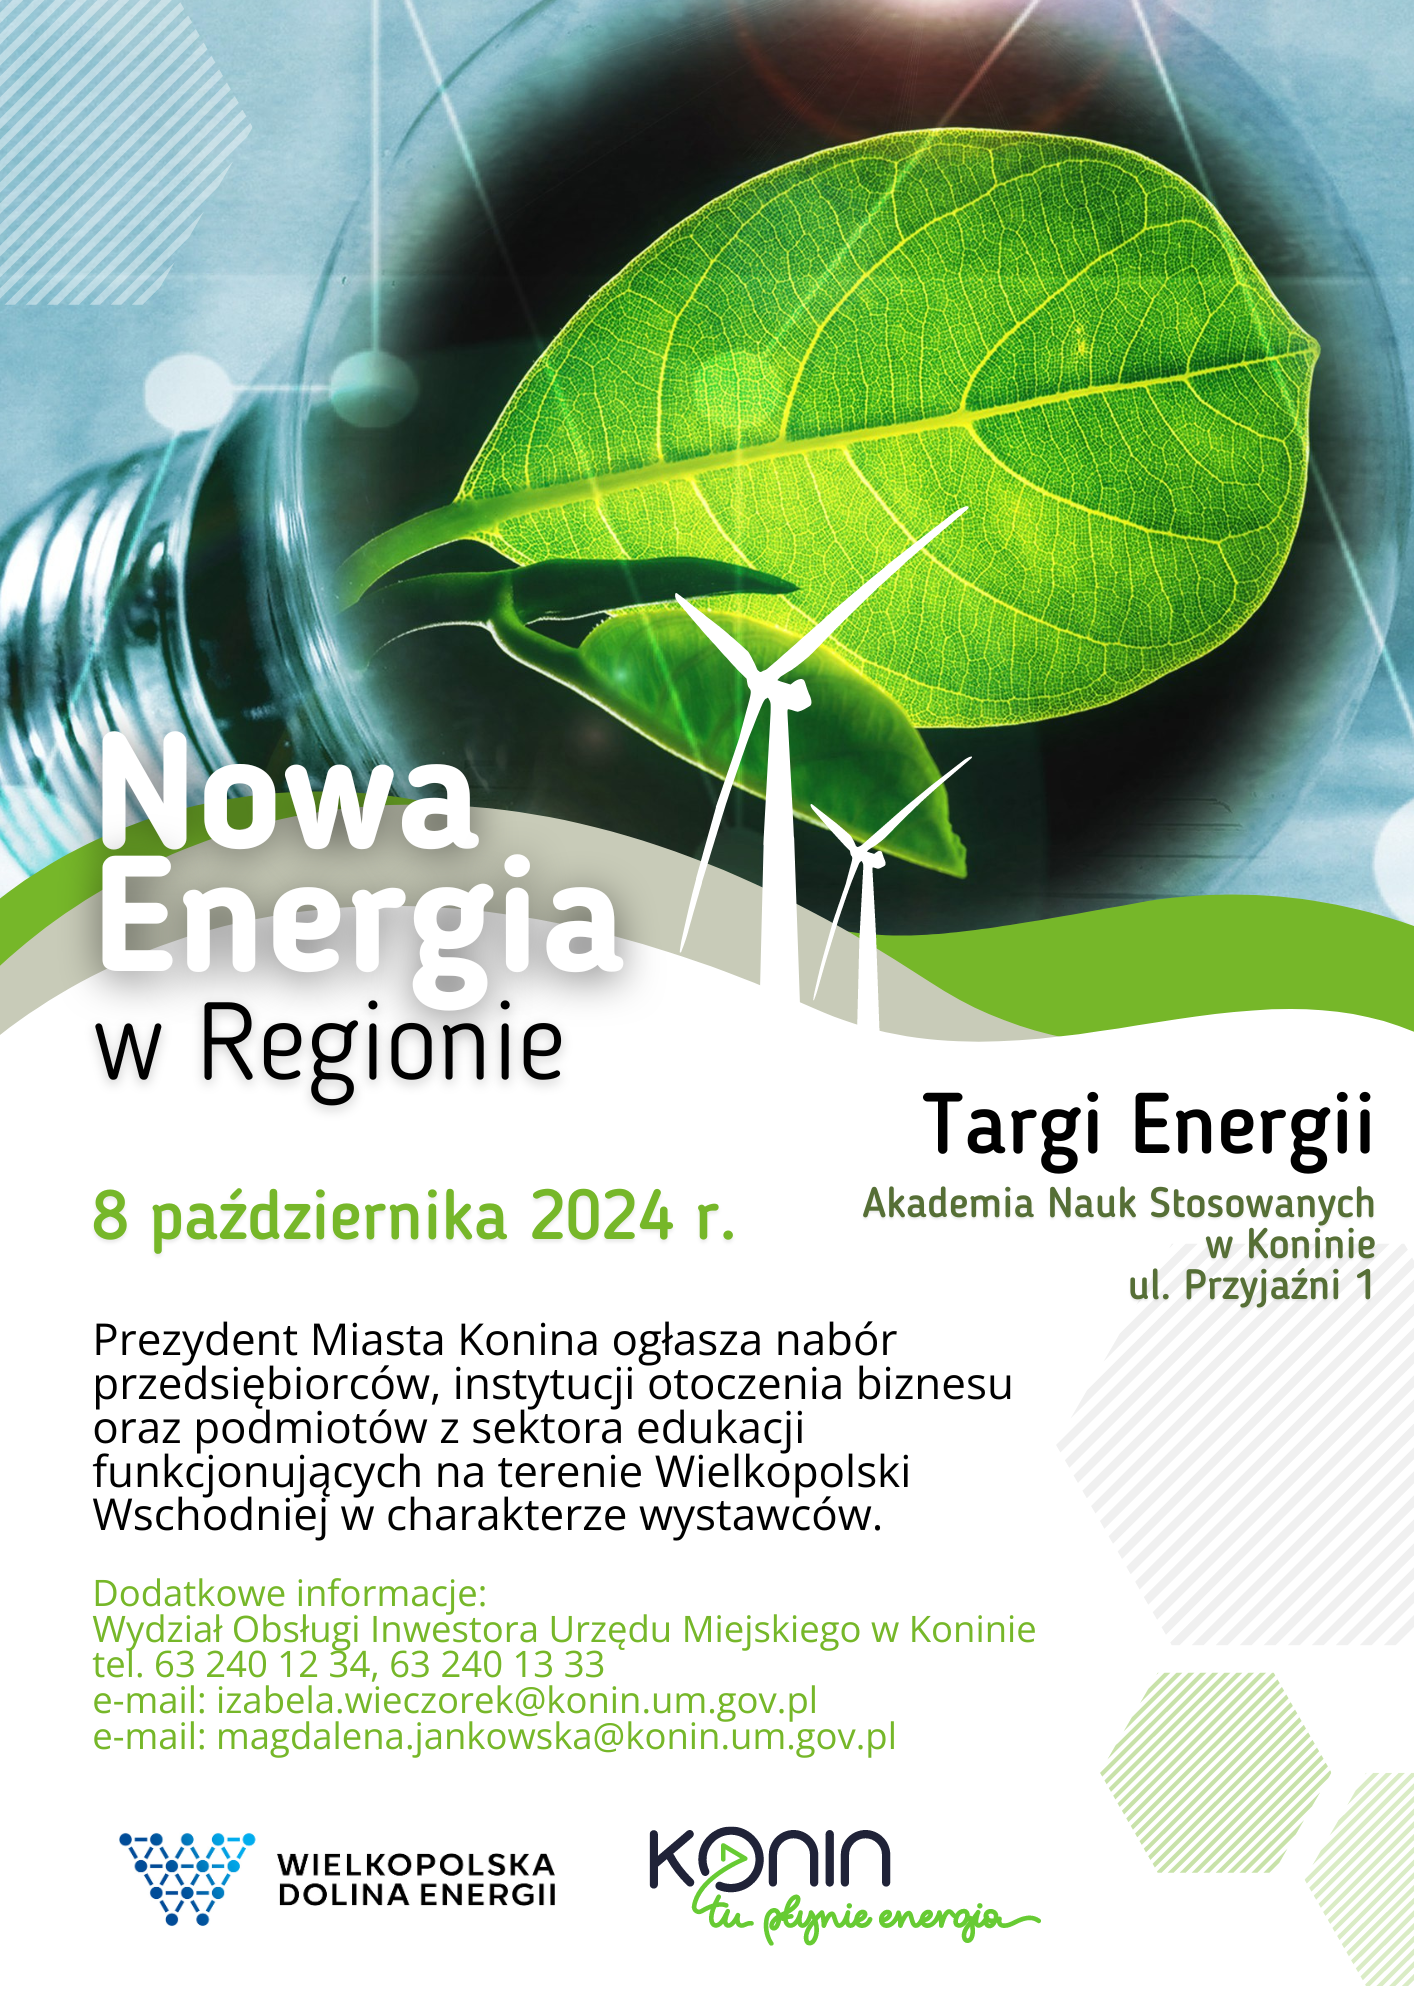 Targii Energii w Koninie 08.10.2024 r. - trwa nabór...